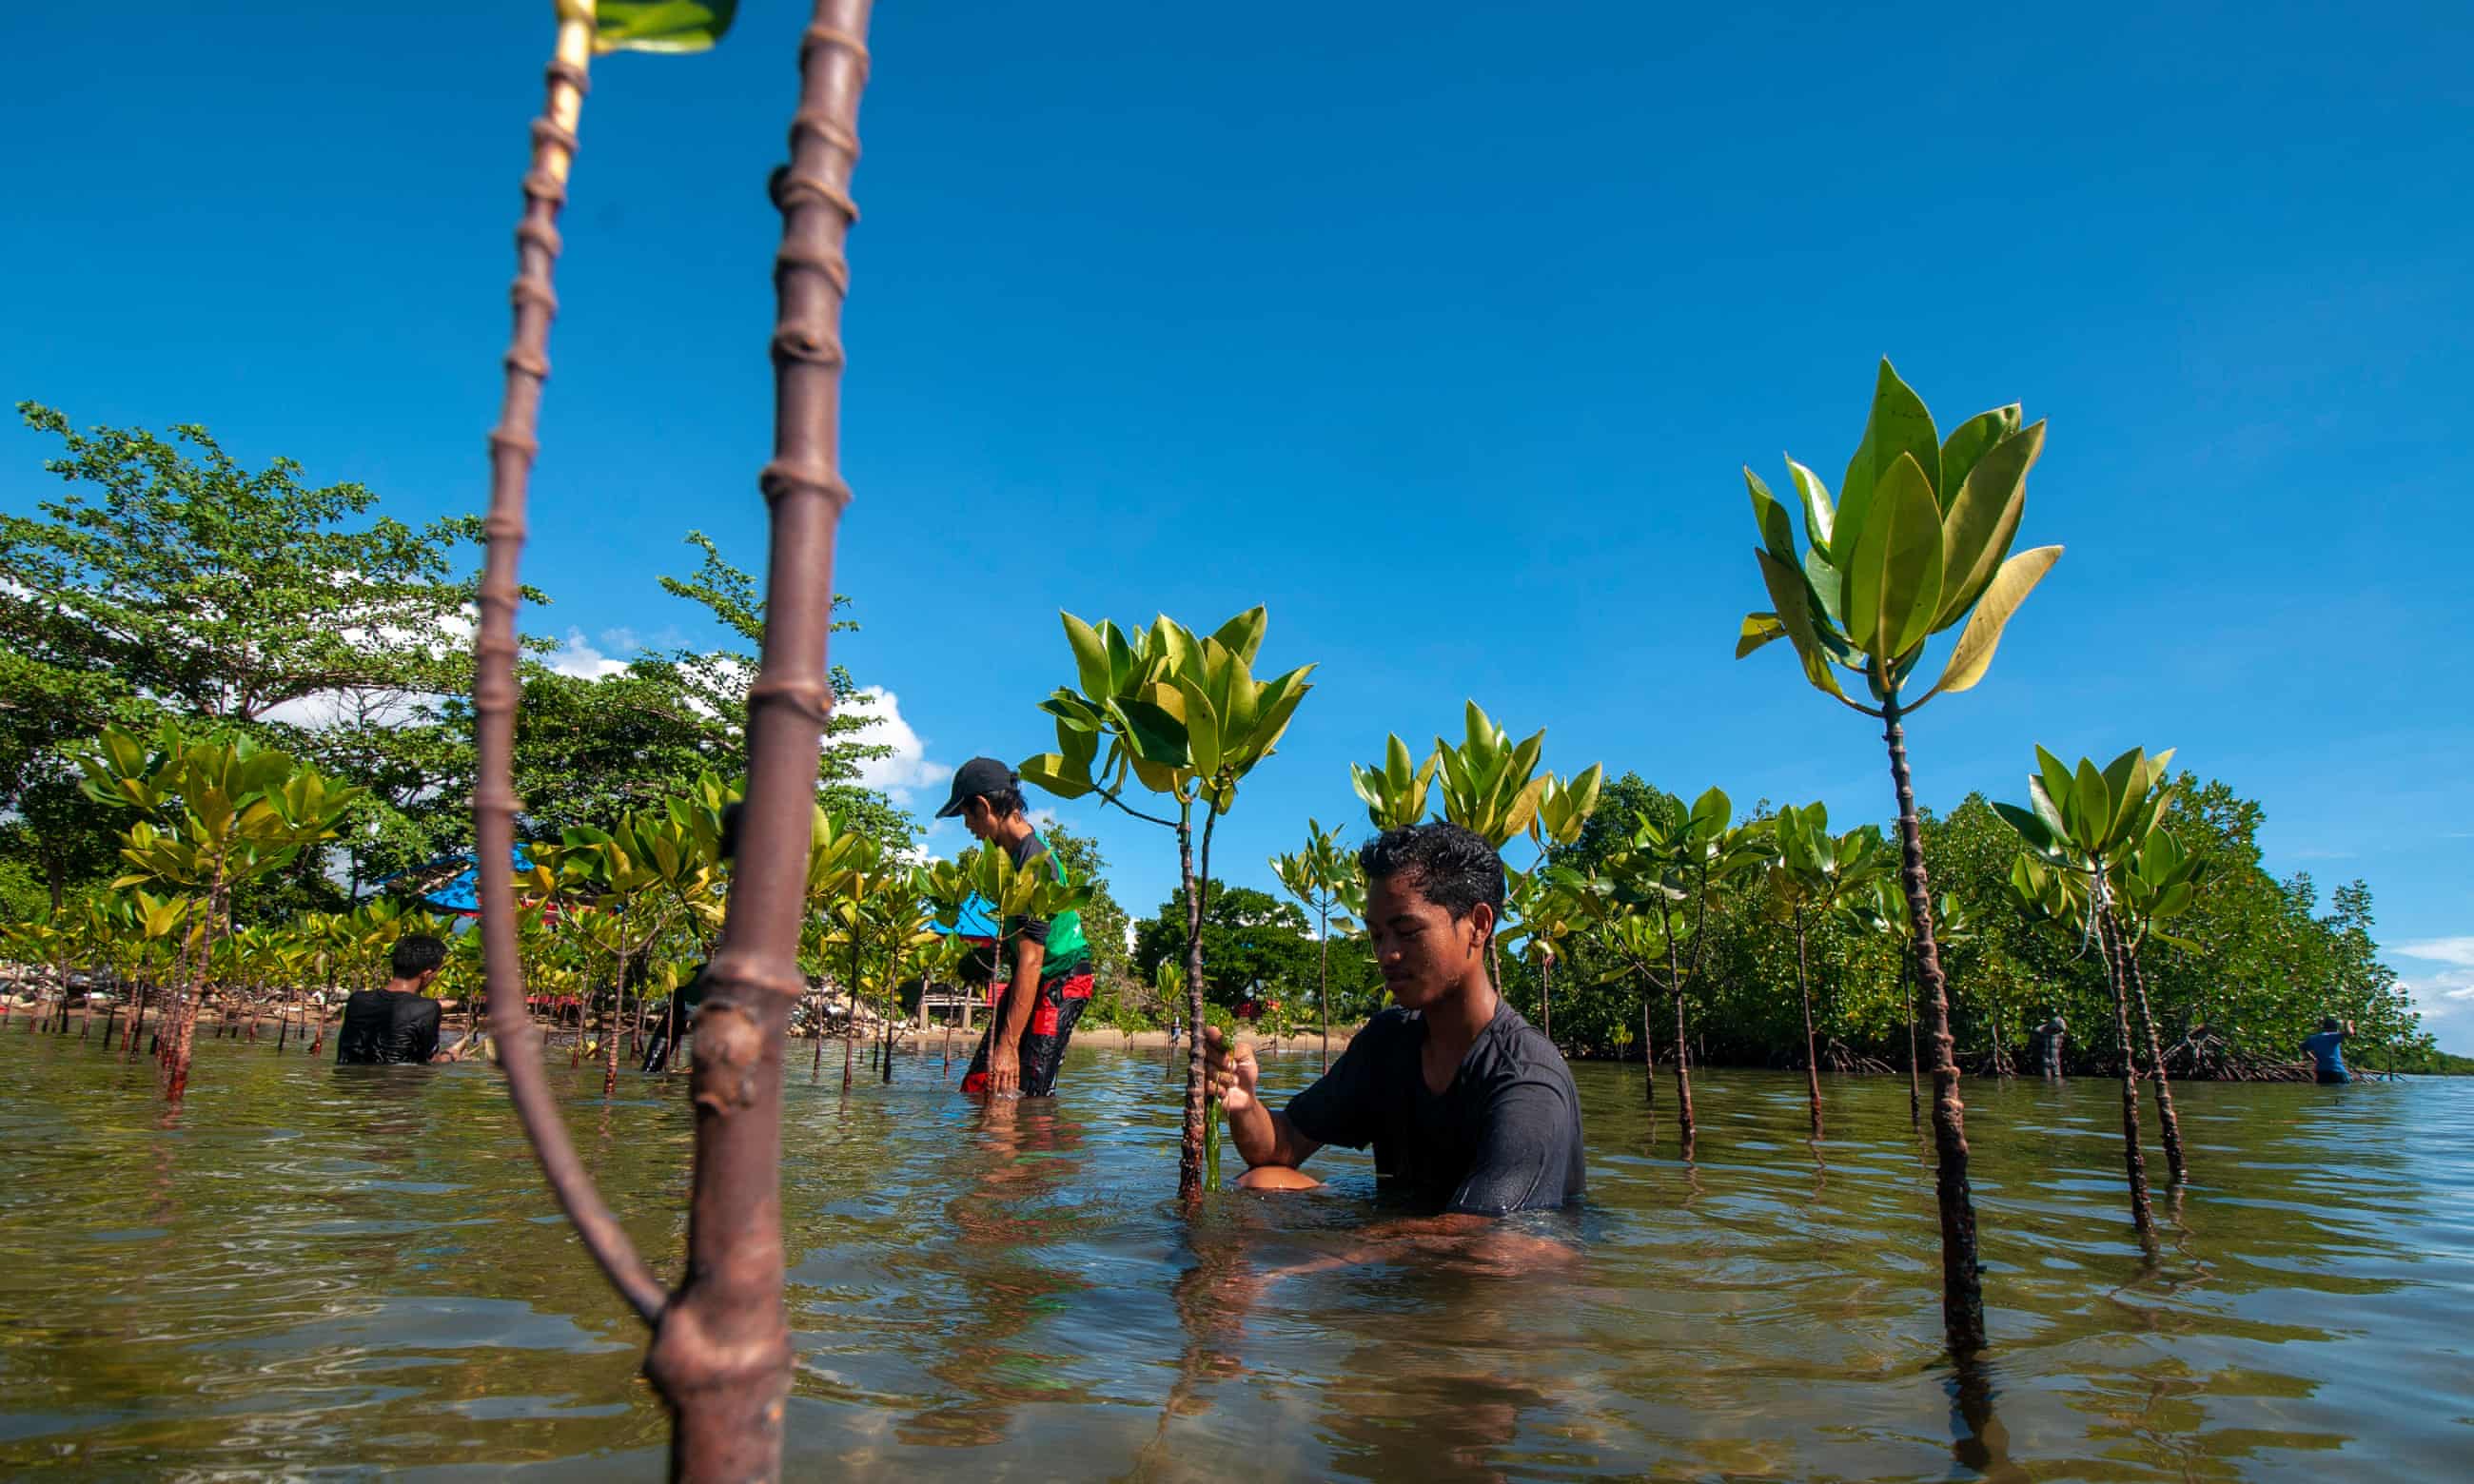 Replanting mangroves